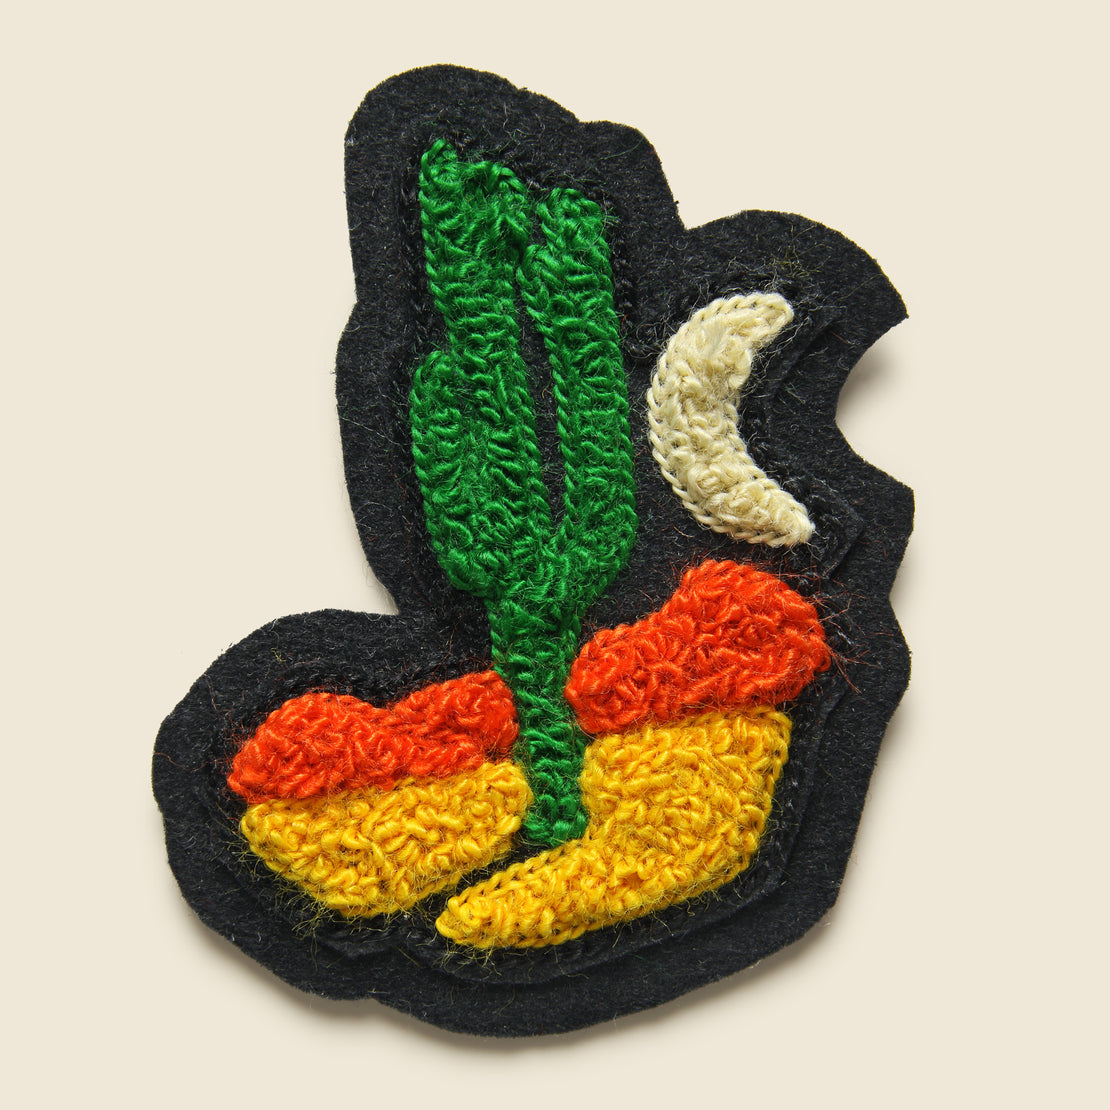 Oxford Pennant Moonlight Cactus Patch - Green/Orange/Black